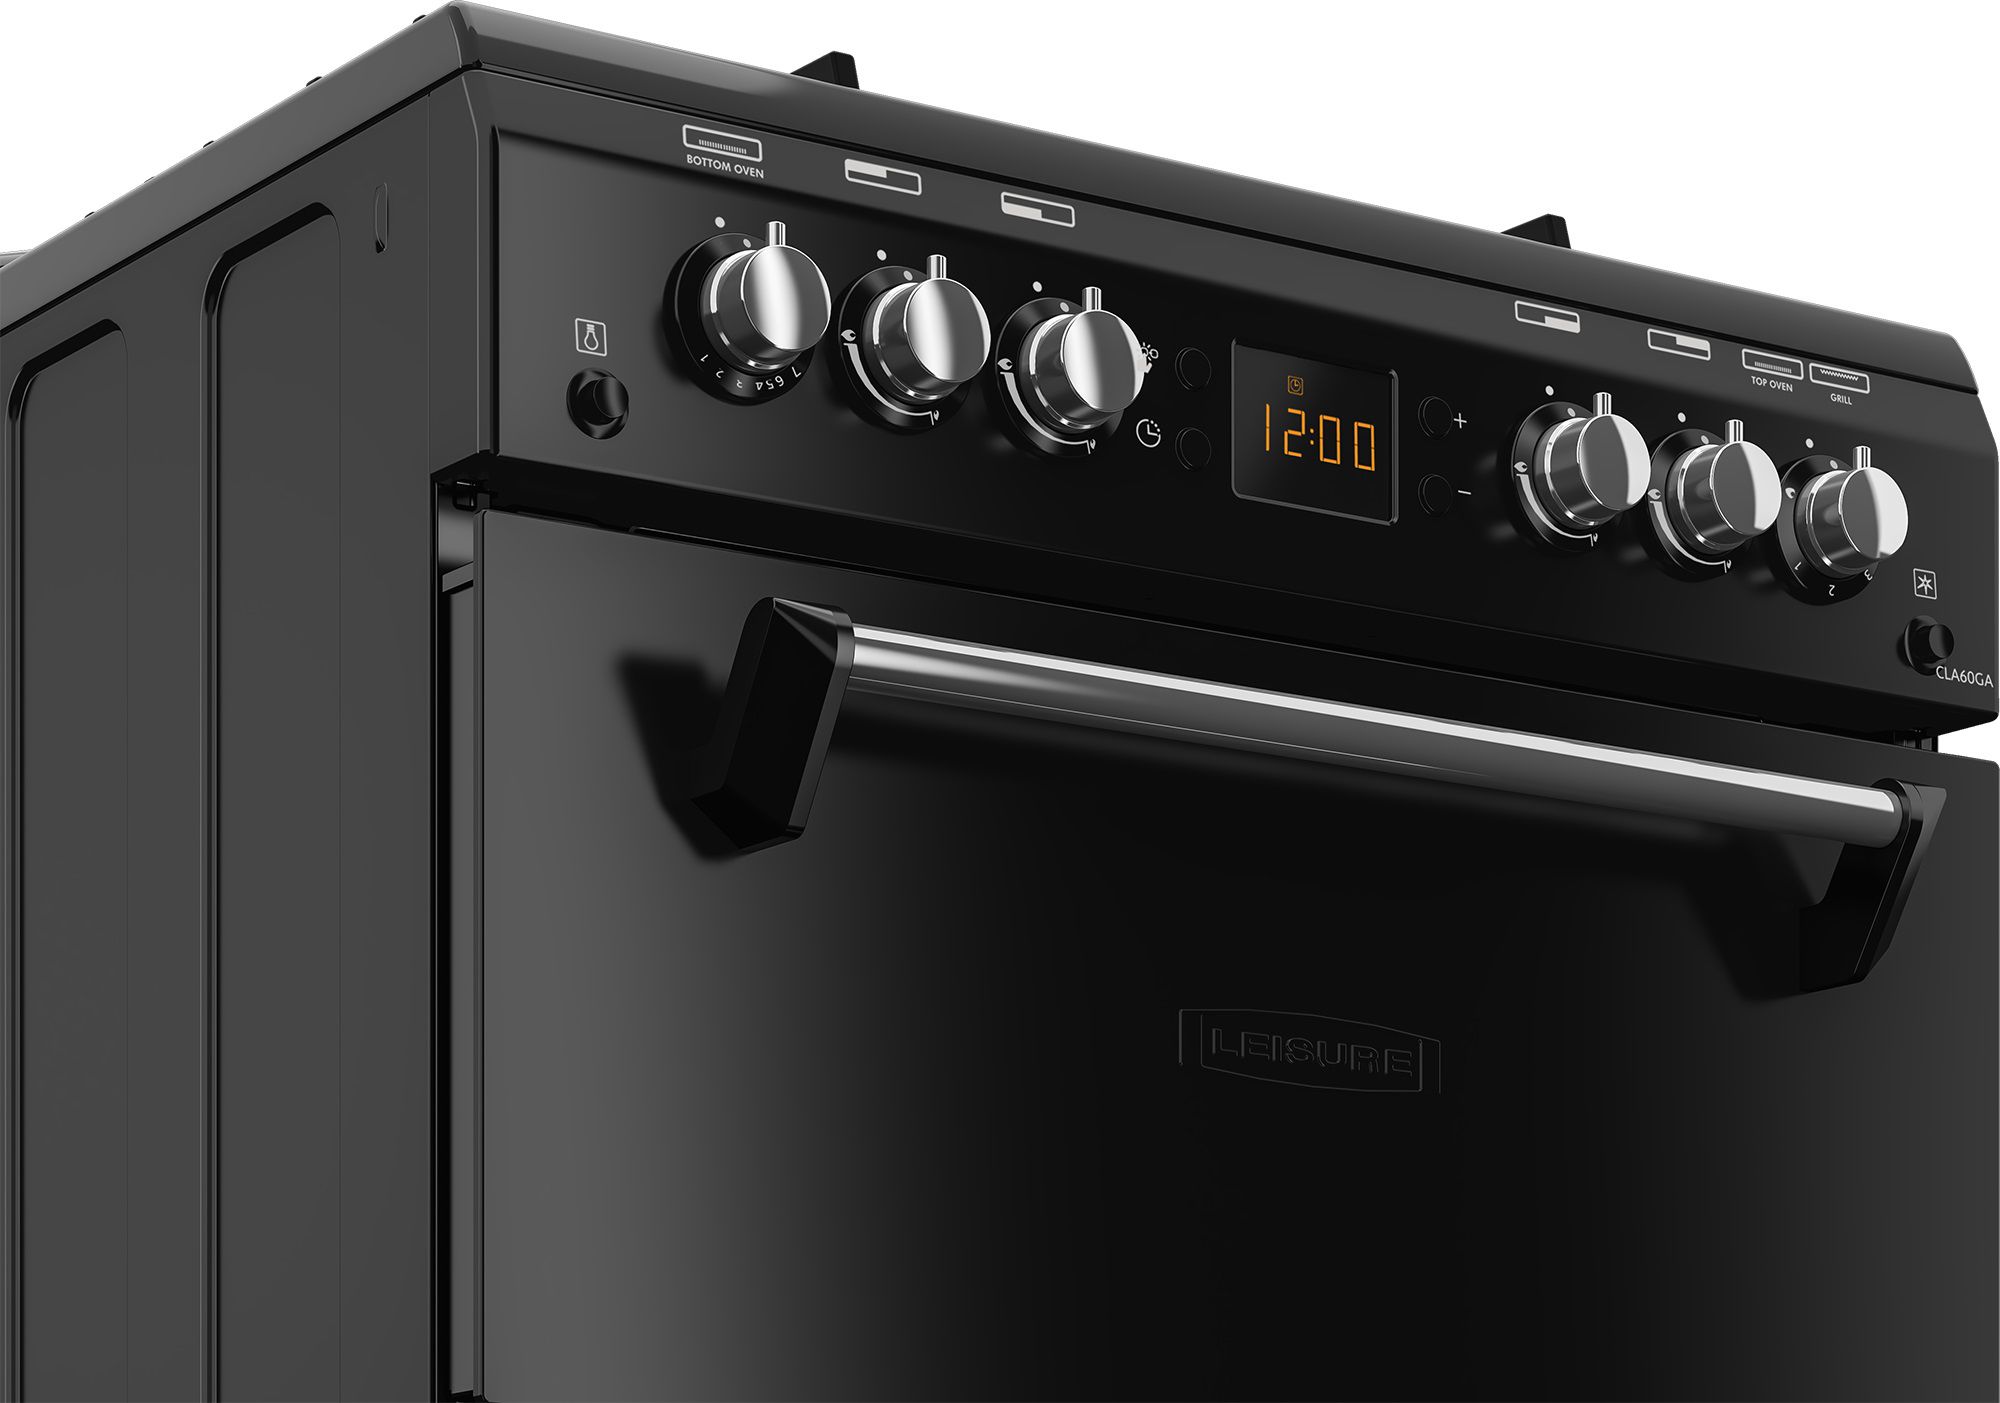 Leisure CLA60GAK Freestanding Gas Range cooker with Gas Hob - Black